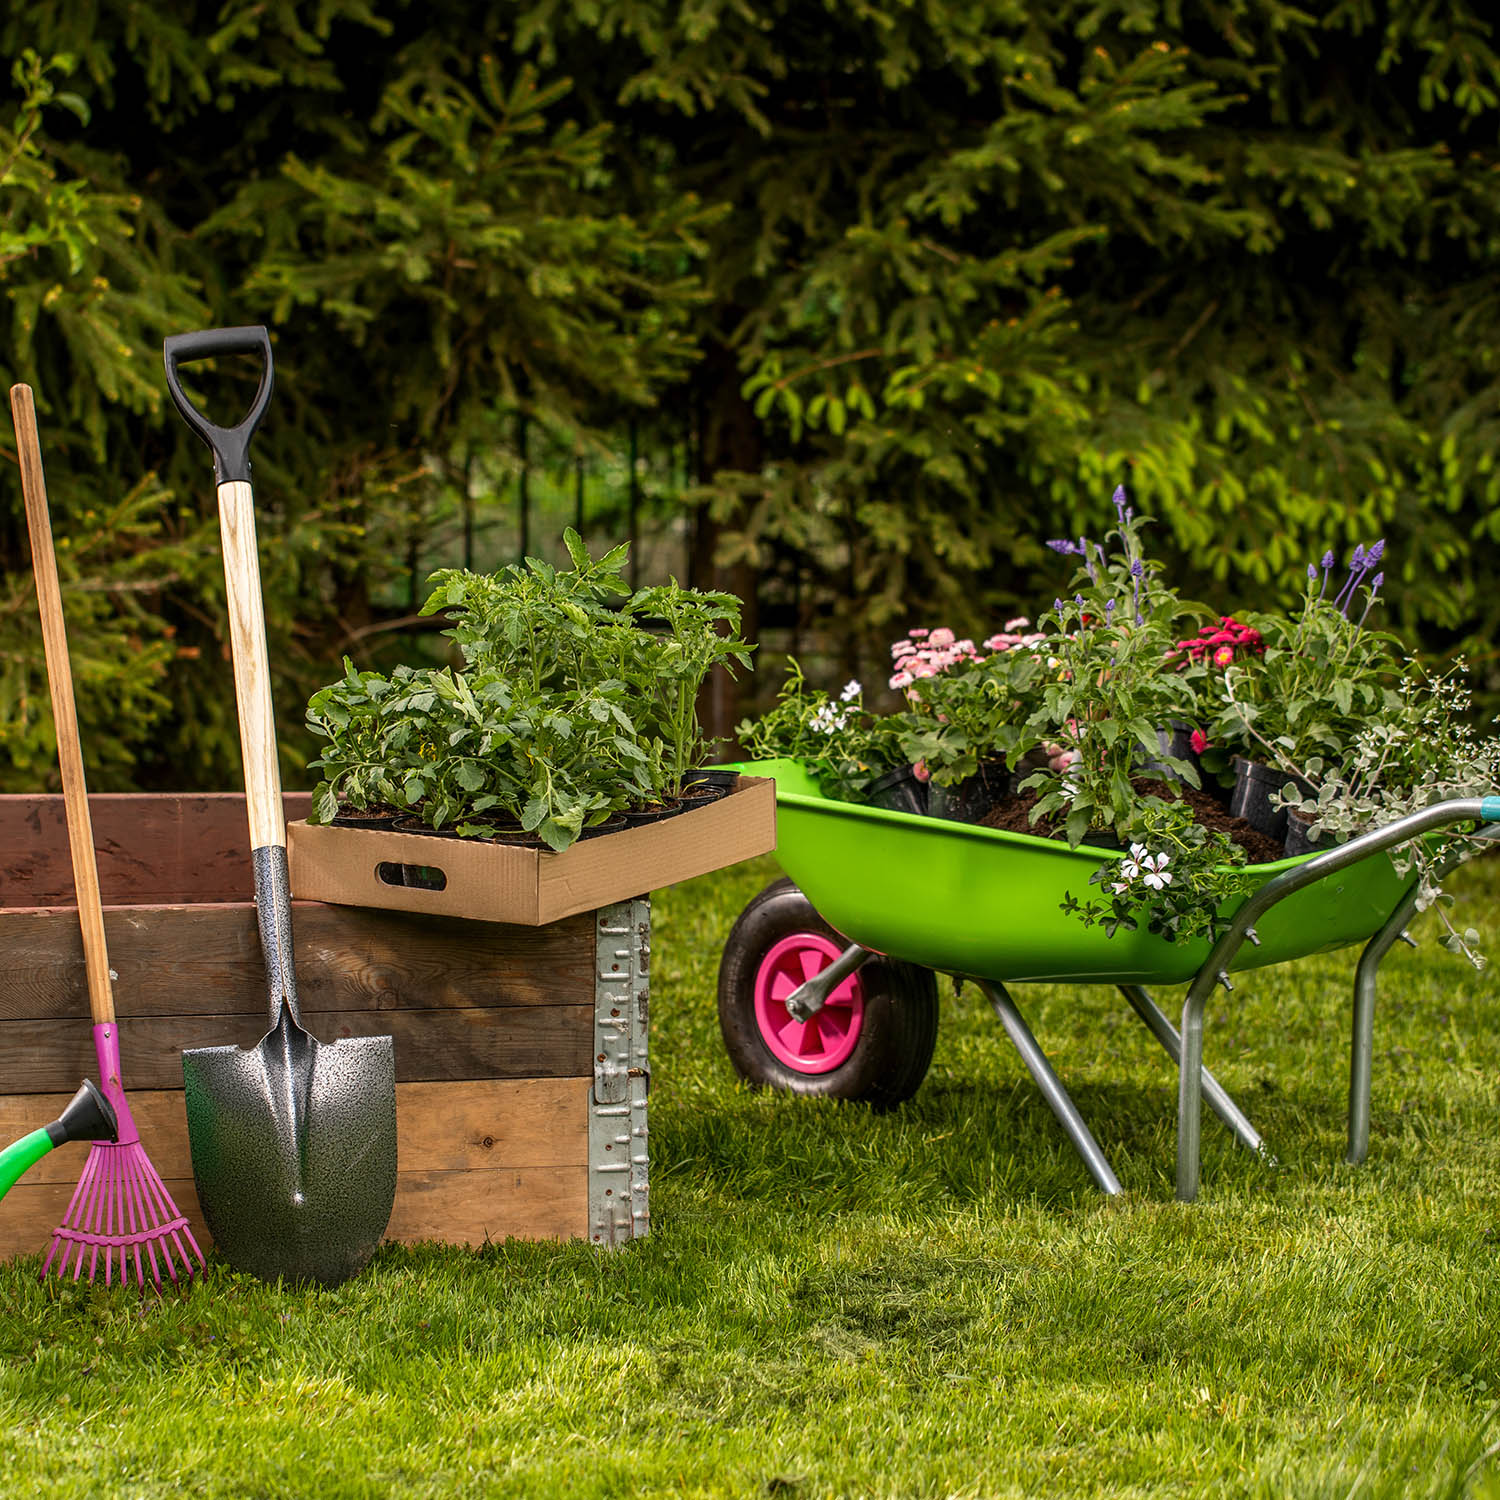 Wheelbarrow with Gardening tools in the garden